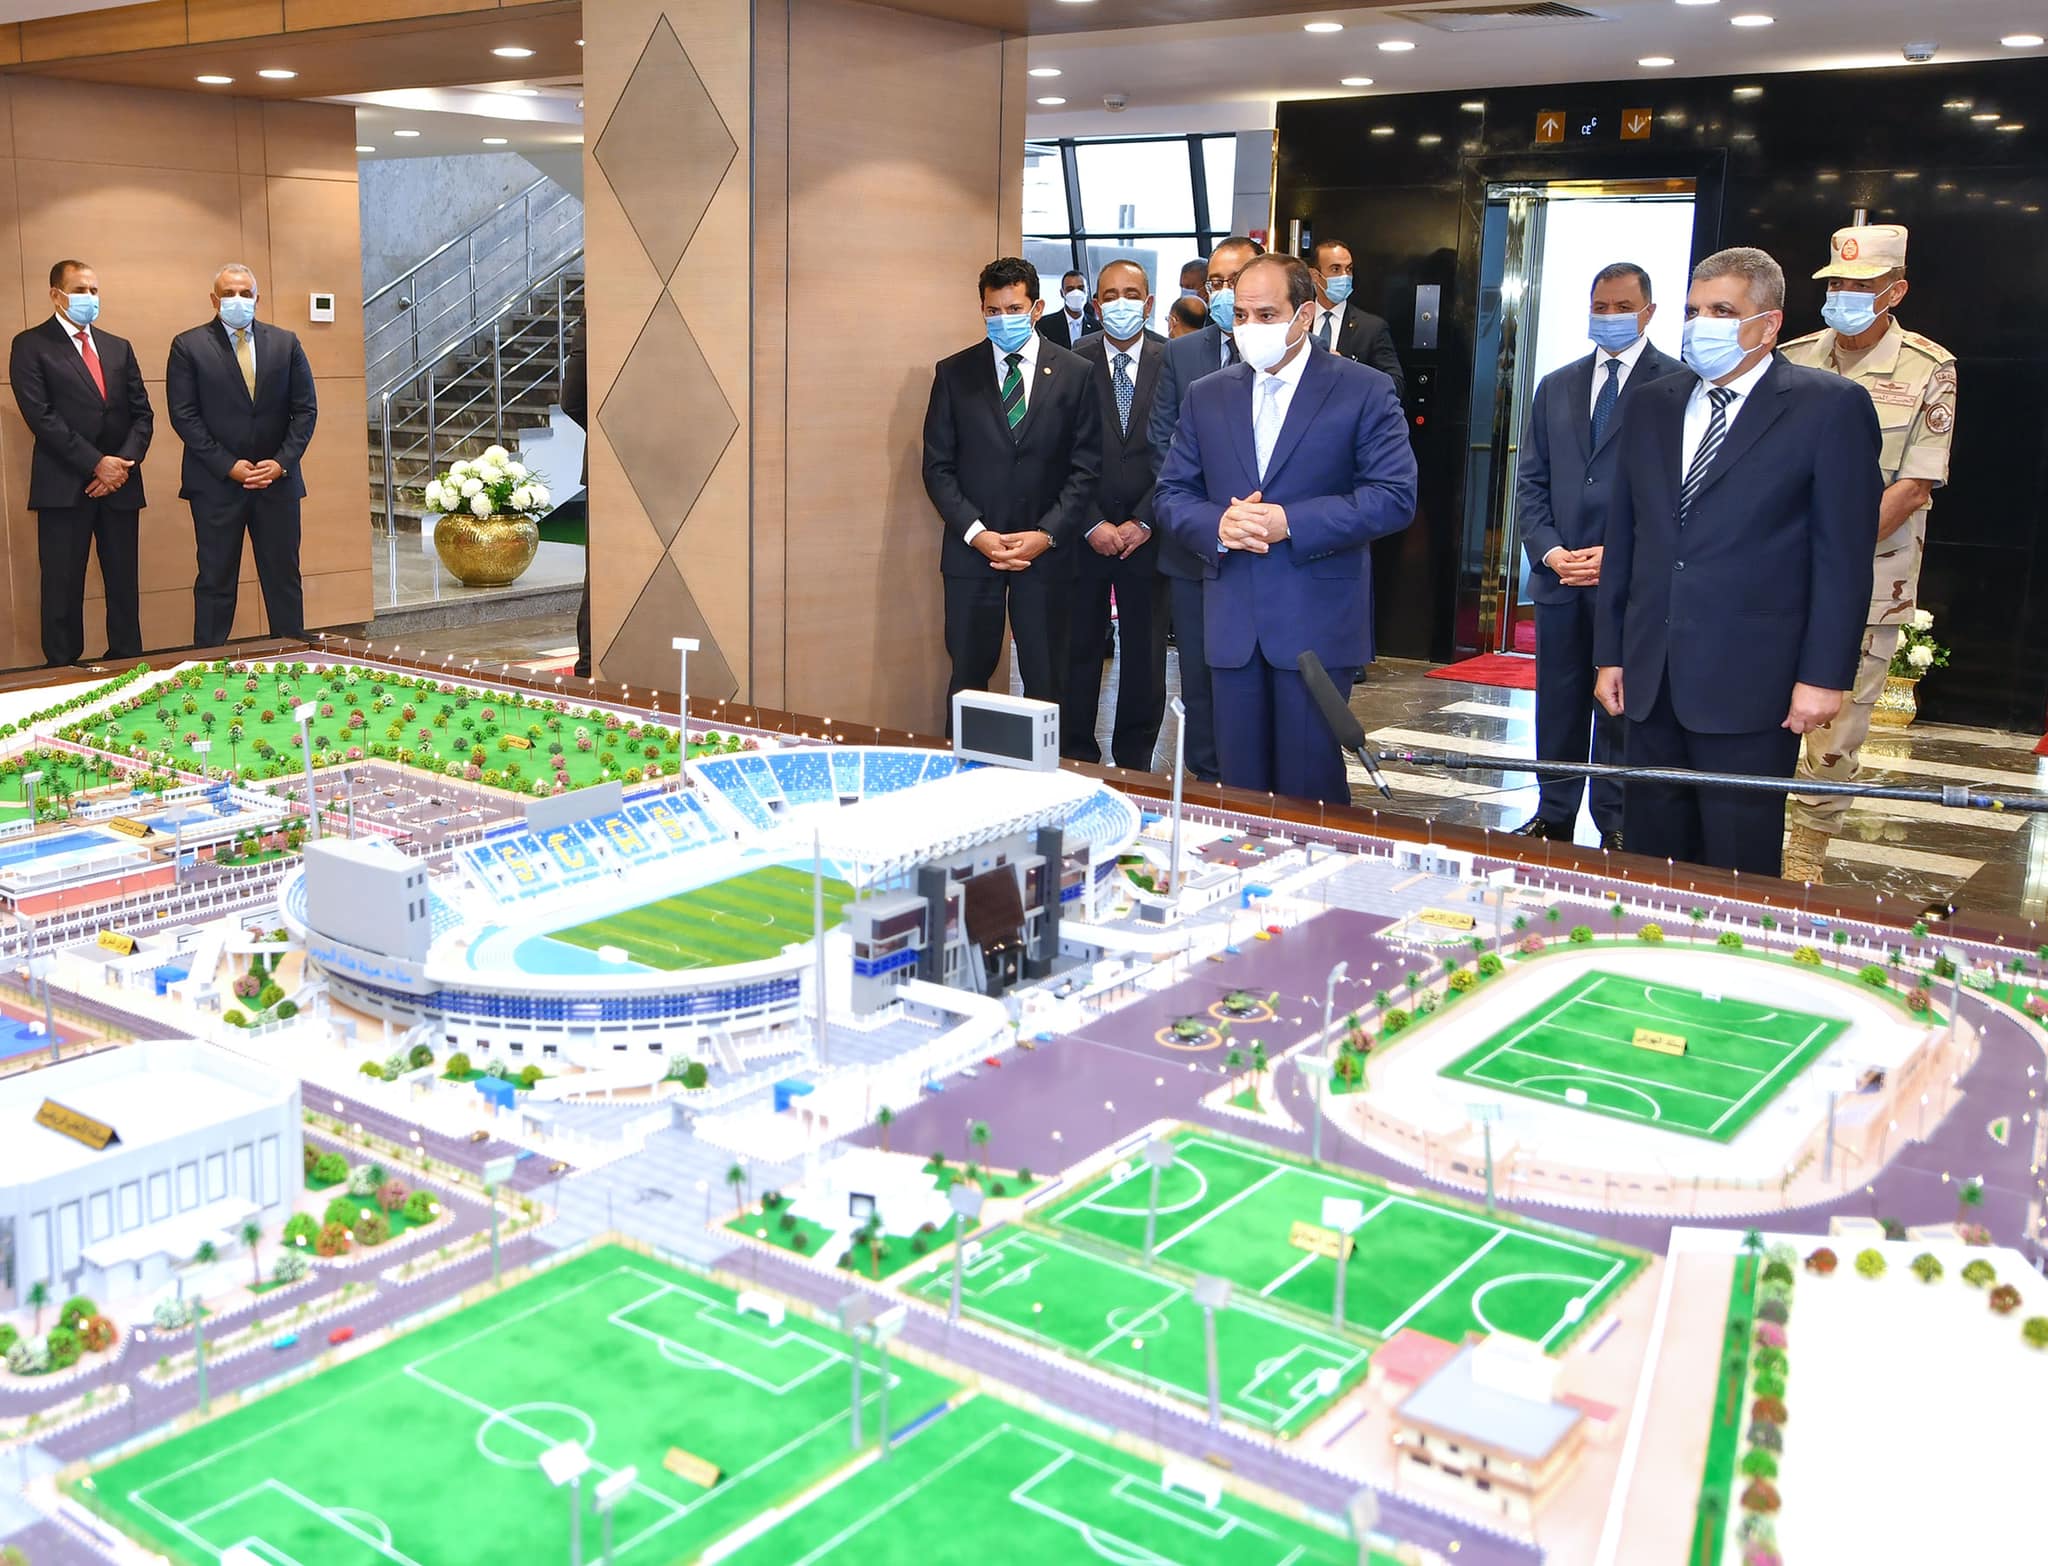 President Abdelfatah Elsisi inaugurates the Olympic village of Suez Canal Authority